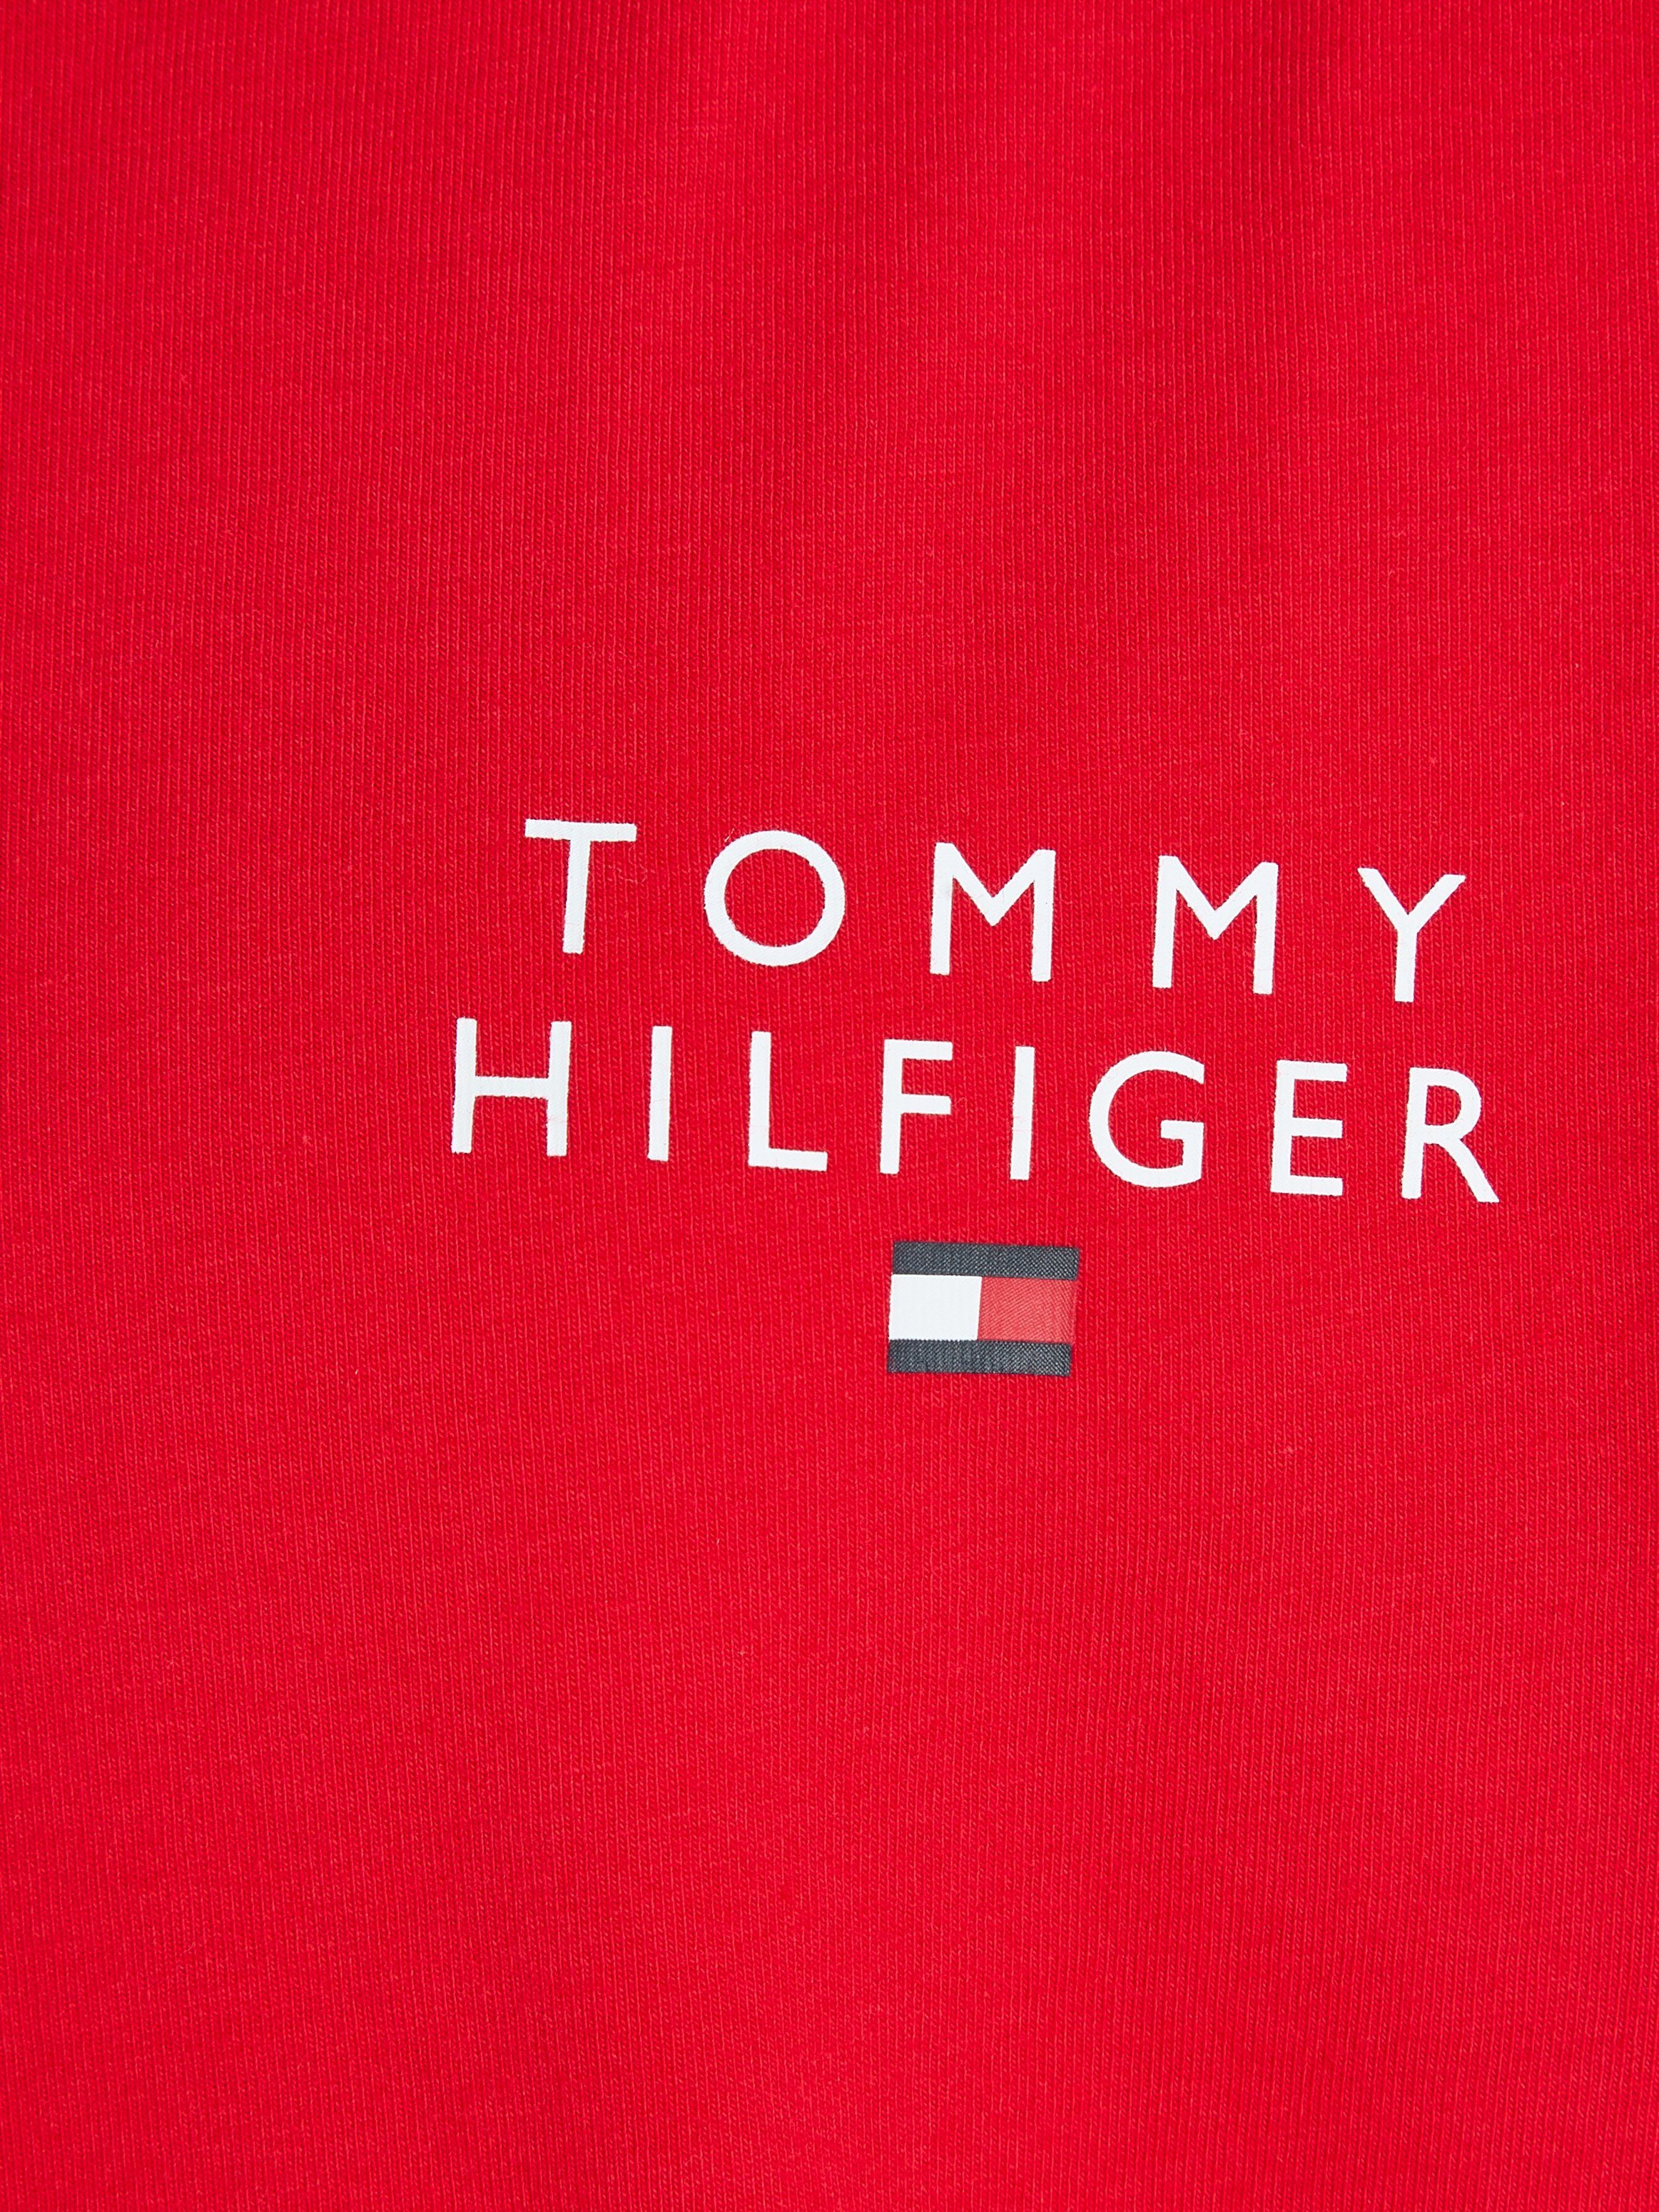 Tommy Hilfiger Underwear Schlafanzug PANTS LS PJ Branding tlg) Tommy mit Hilfiger LONG PRINT SET (2